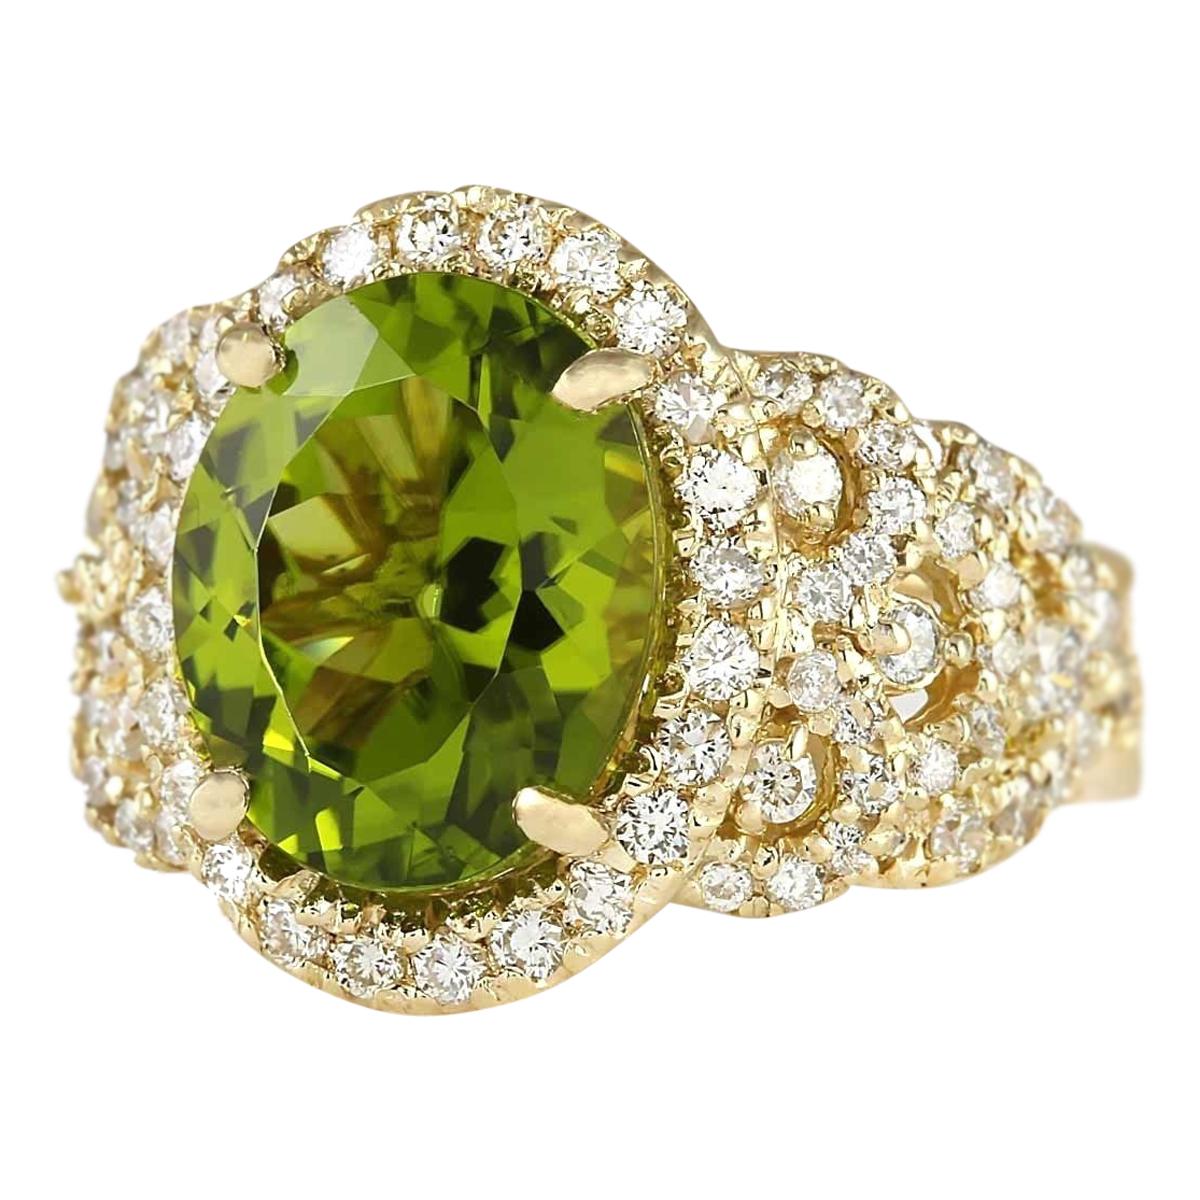 8.02 Carat Natural Peridot 14 Karat Yellow Gold Diamond Ring
Stamped: 18K Yellow Gold
Total Ring Weight: 10.0 Grams
Total Natural Peridot Weight is 6.52 Carat (Measures: 12.00x10.00 mm)
Color: Green
Total Natural Diamond Weight is 1.50 Carat
Color: